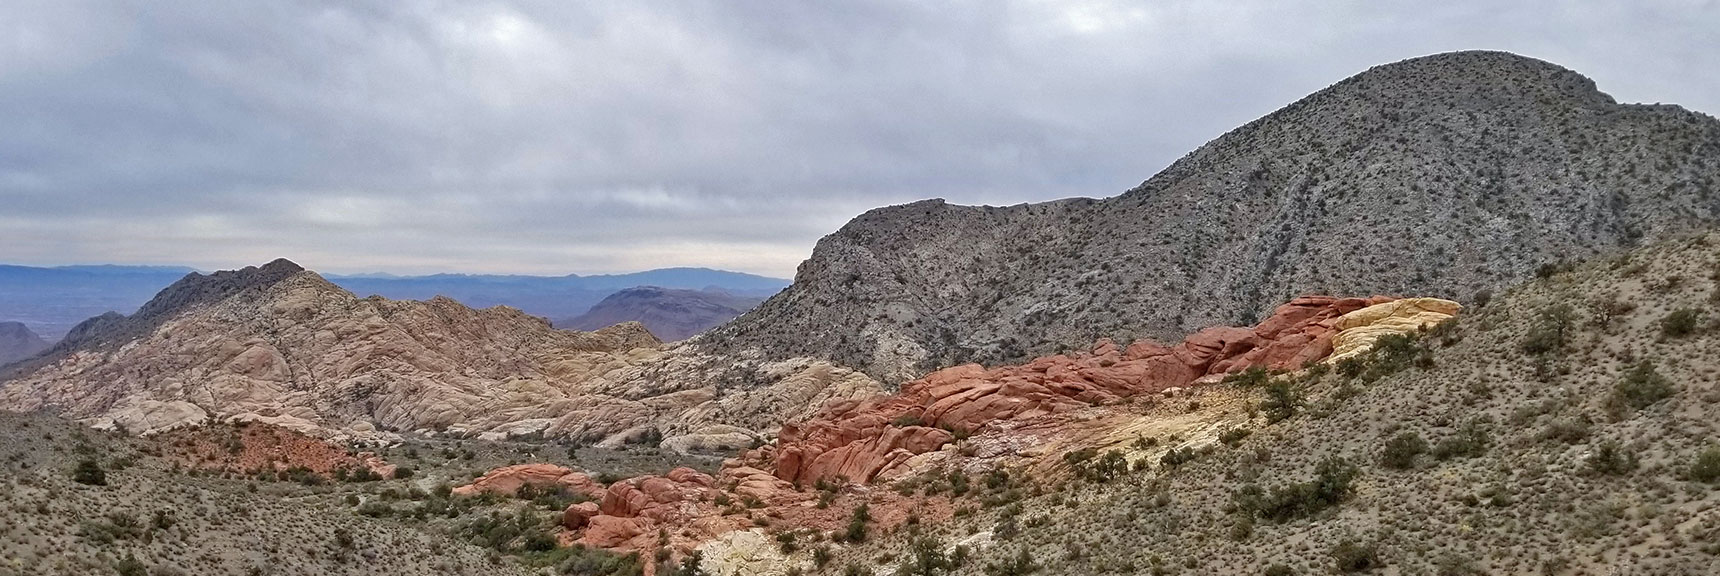 Upper Calico Hills and Turtlehead Peak in Calico Basin, Nevada